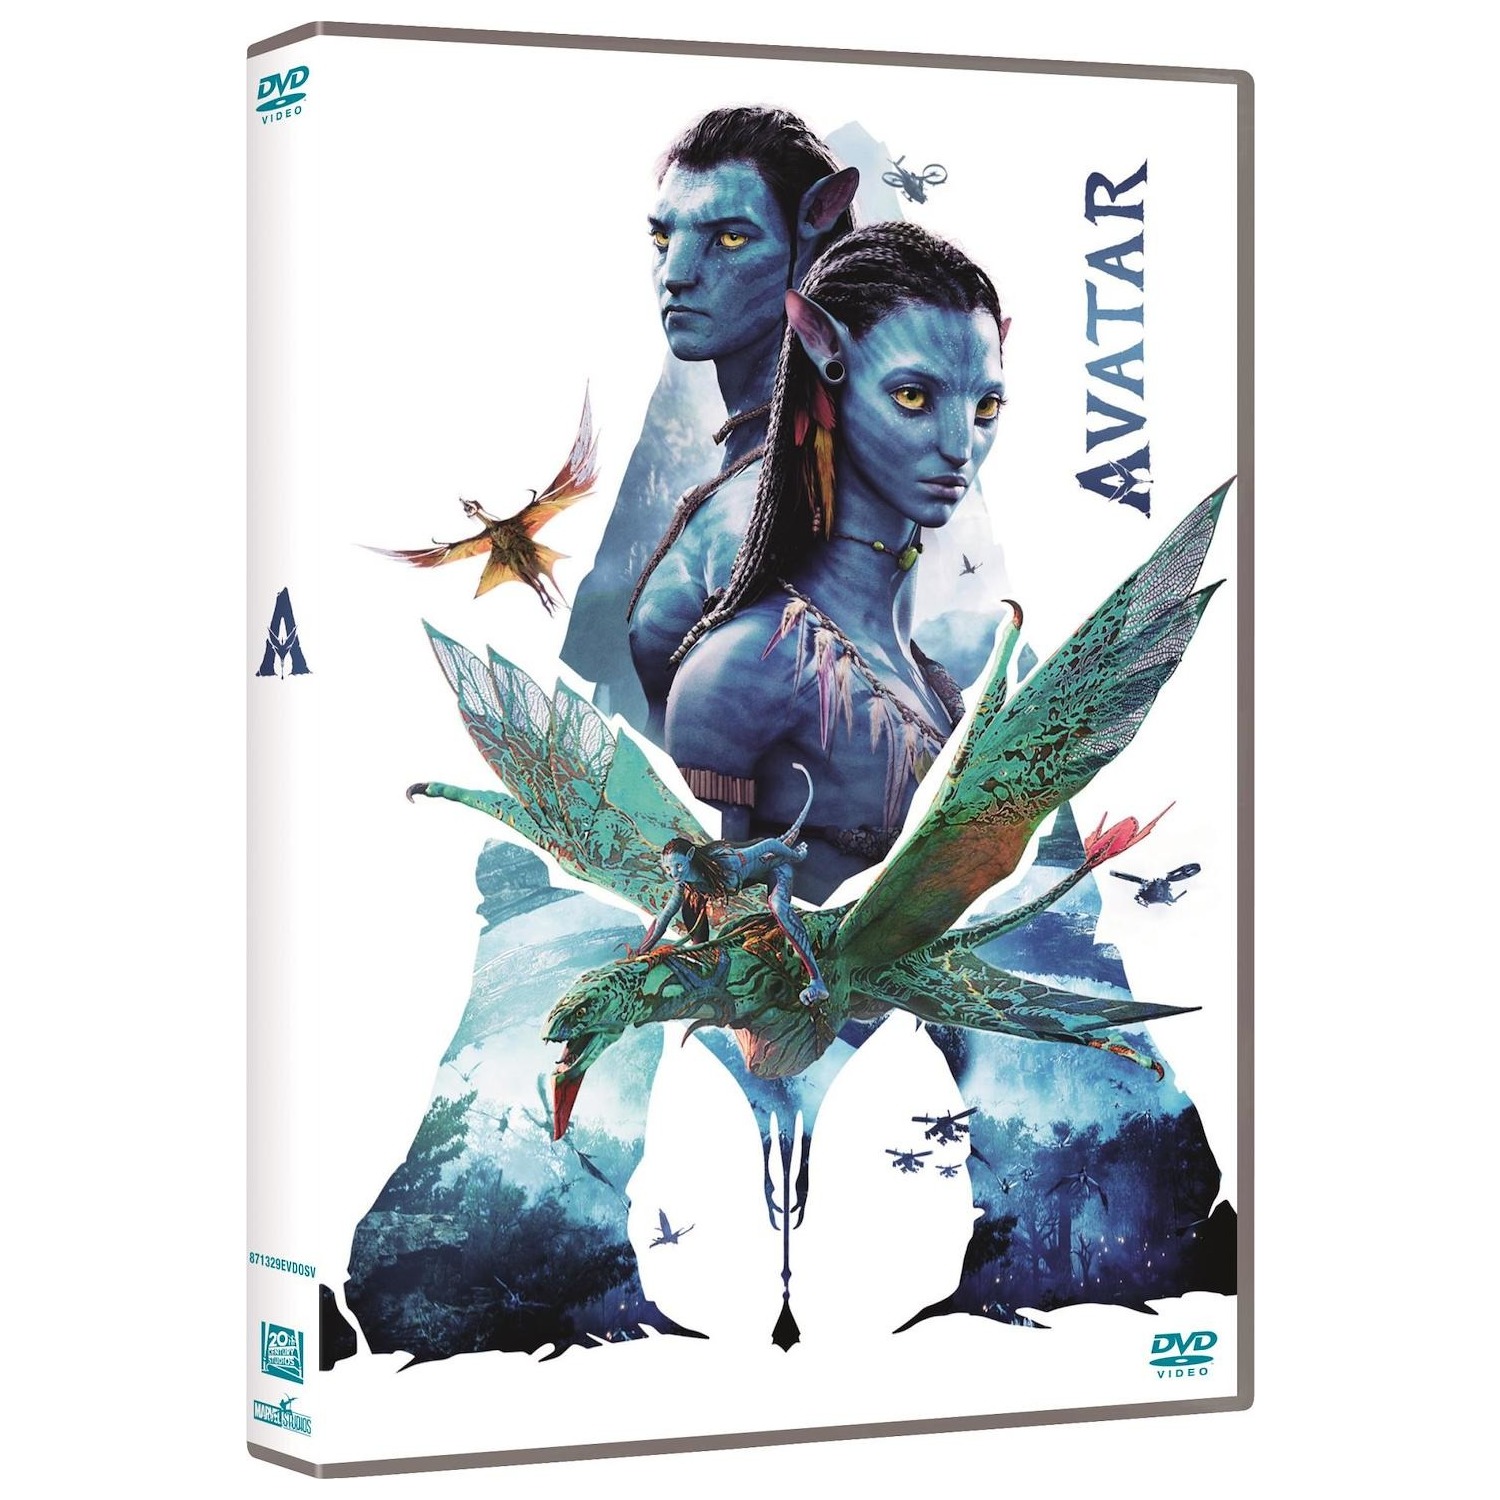 Immagine per DVD Avatar remastered da DIMOStore